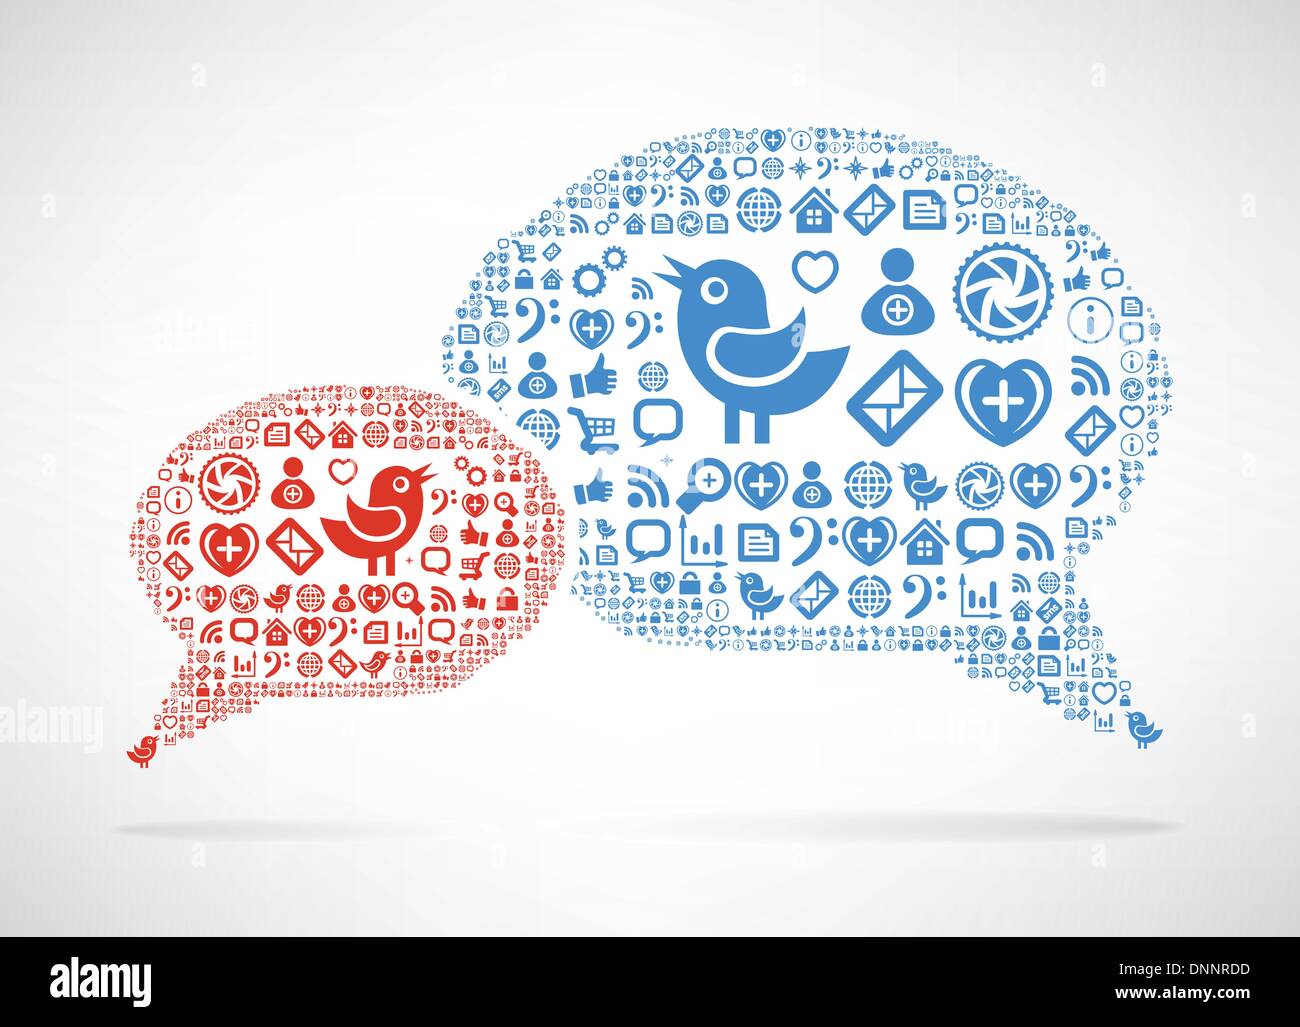 Social Media concept. Cloud icon in the form of speech bubble Stock Vector